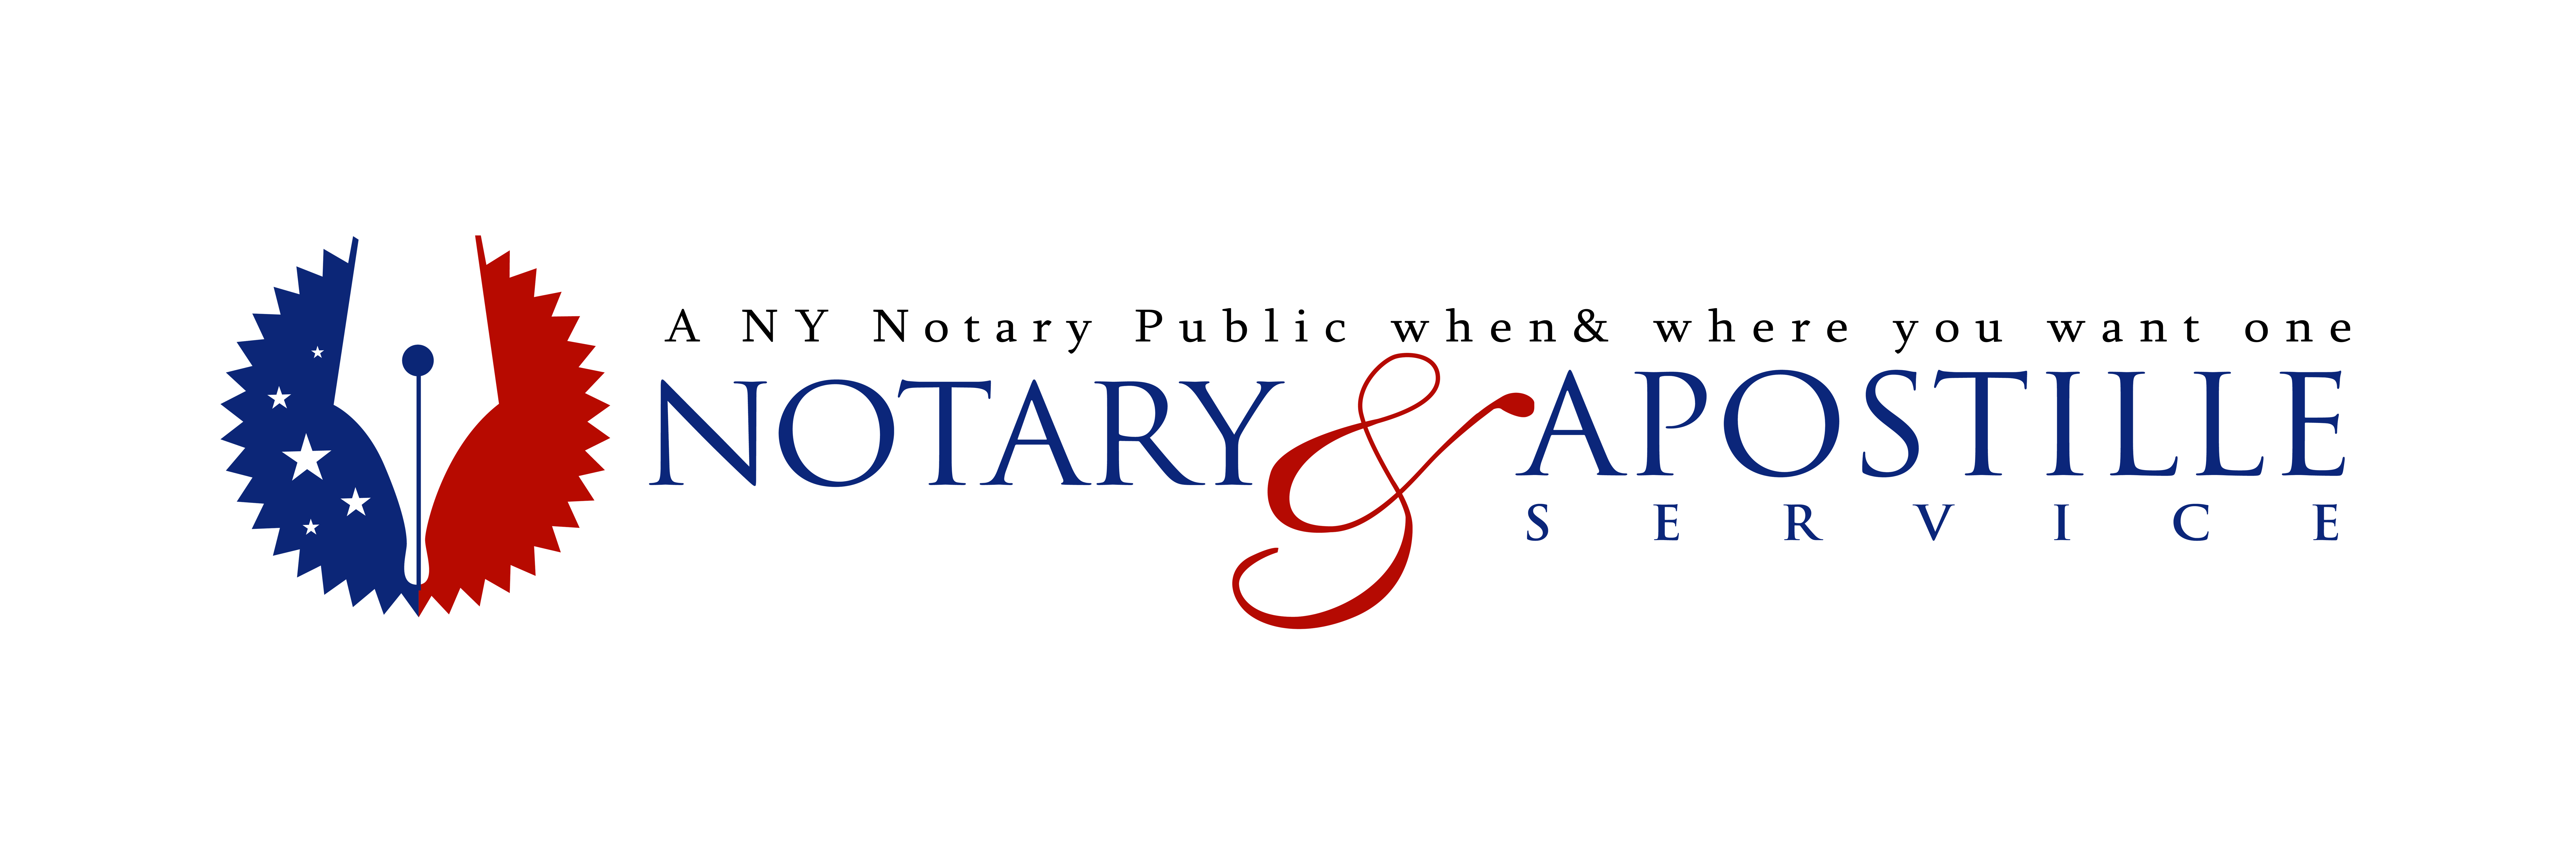 Notary & Apostille Service, Inc.